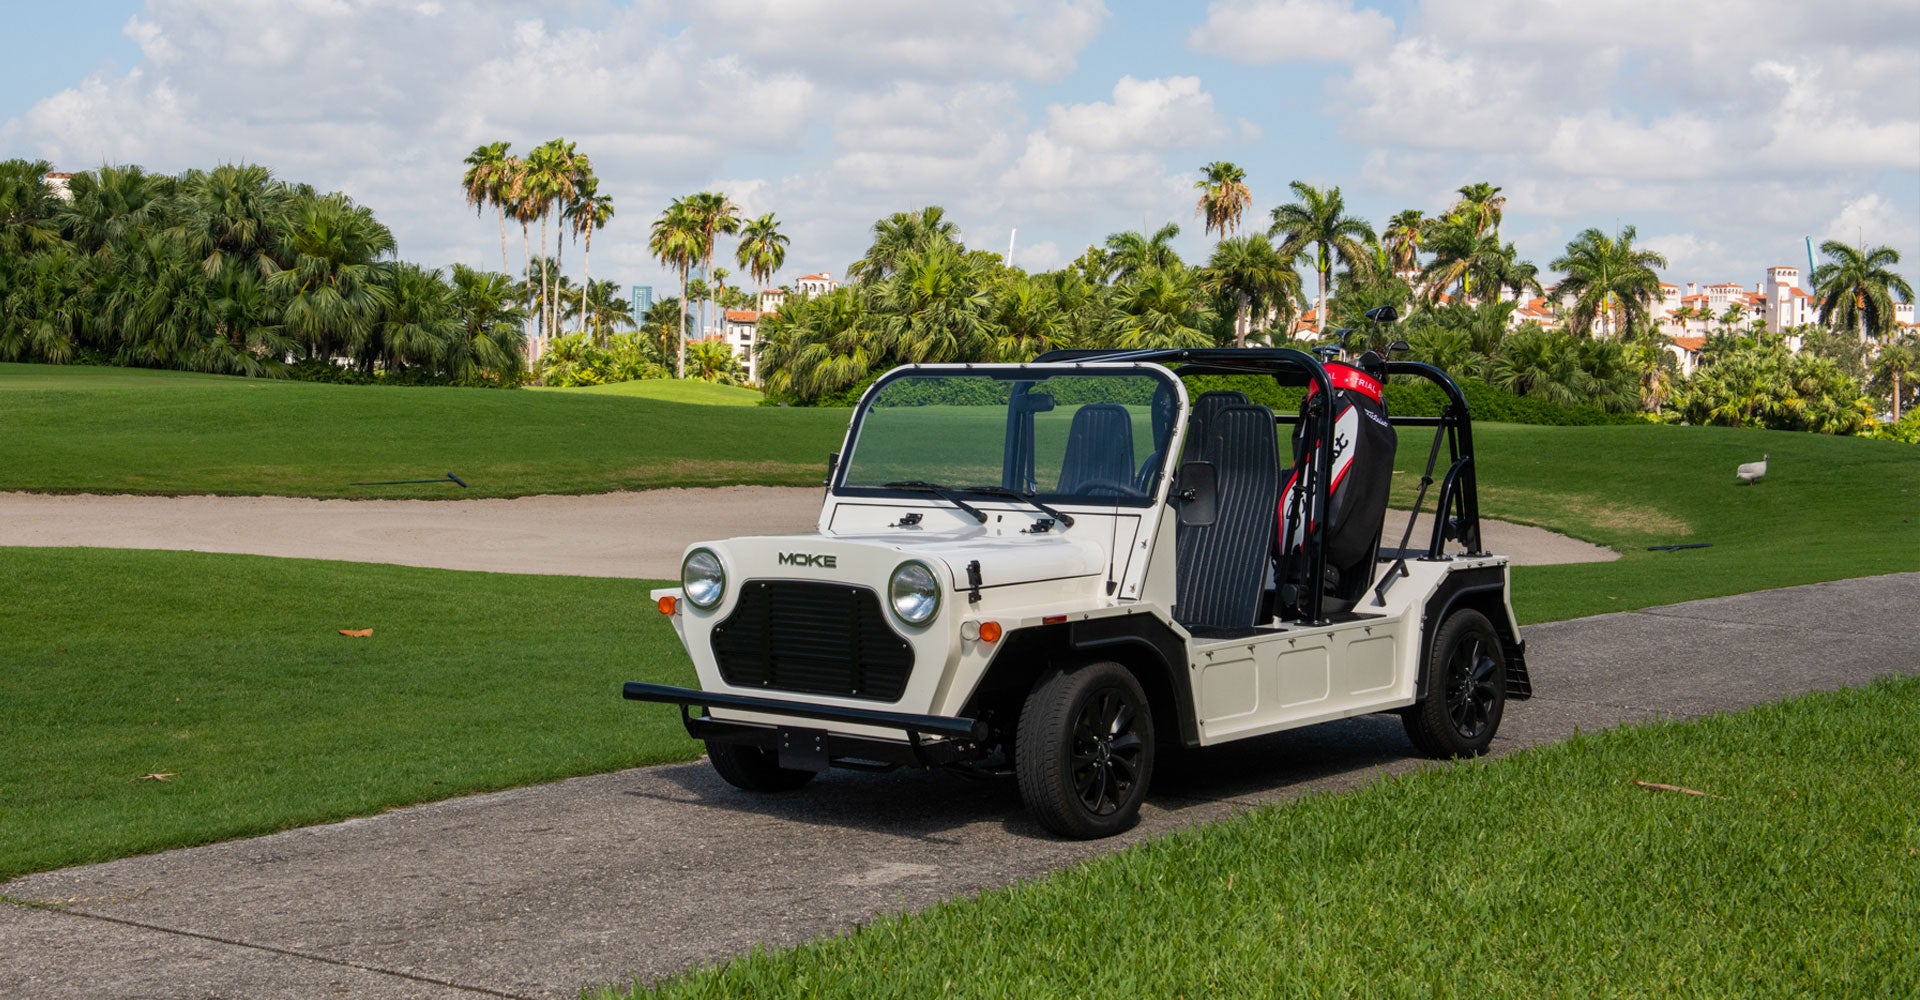 Moke Electric Golf Cart For Sale